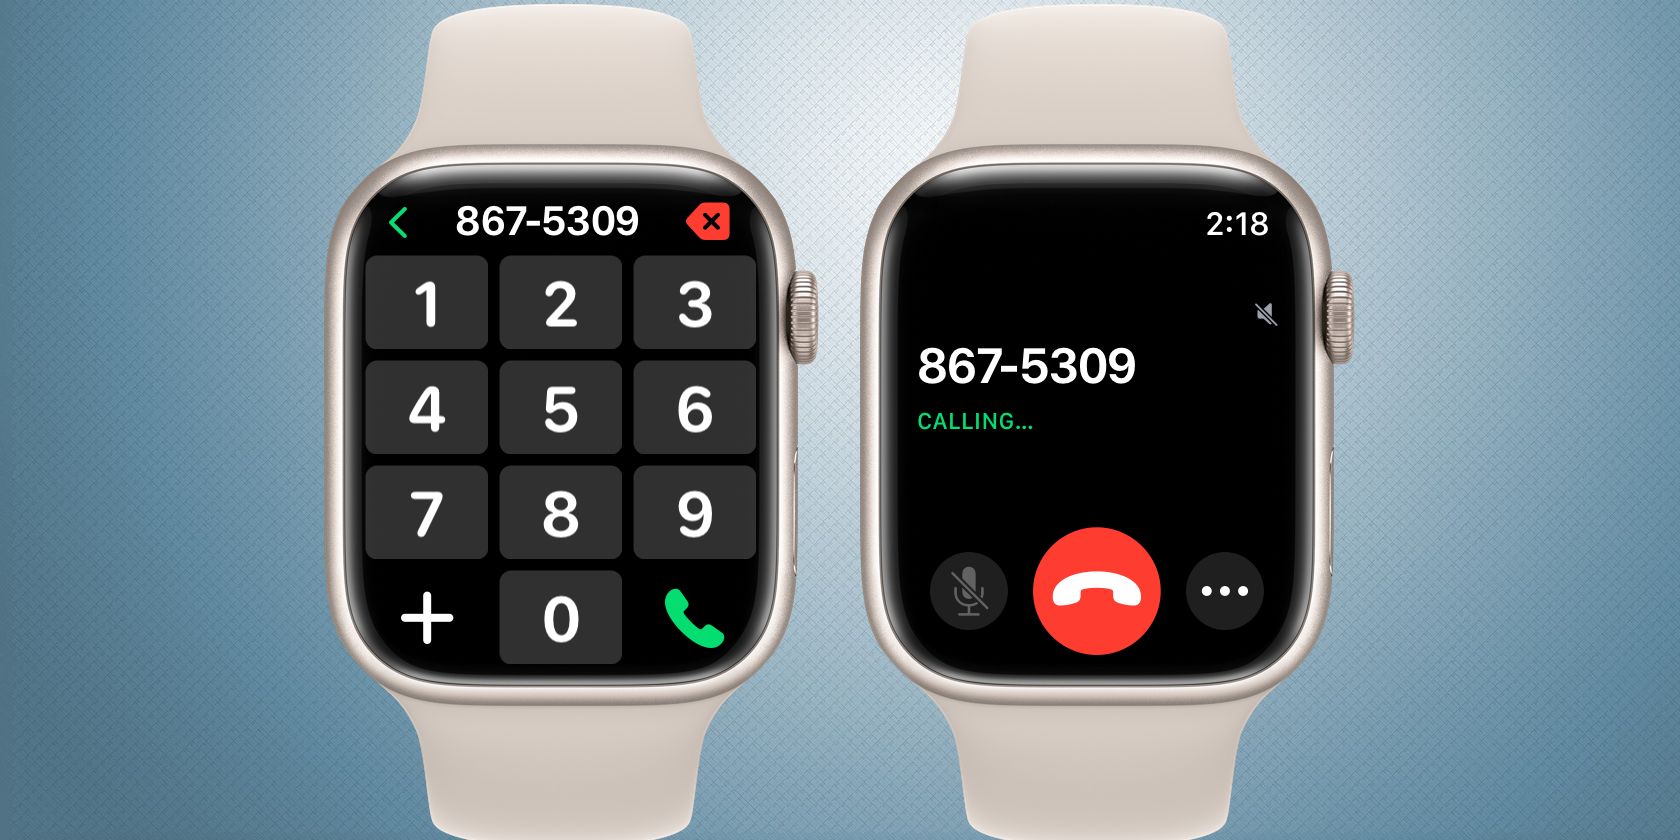 Apple Watch phone calls